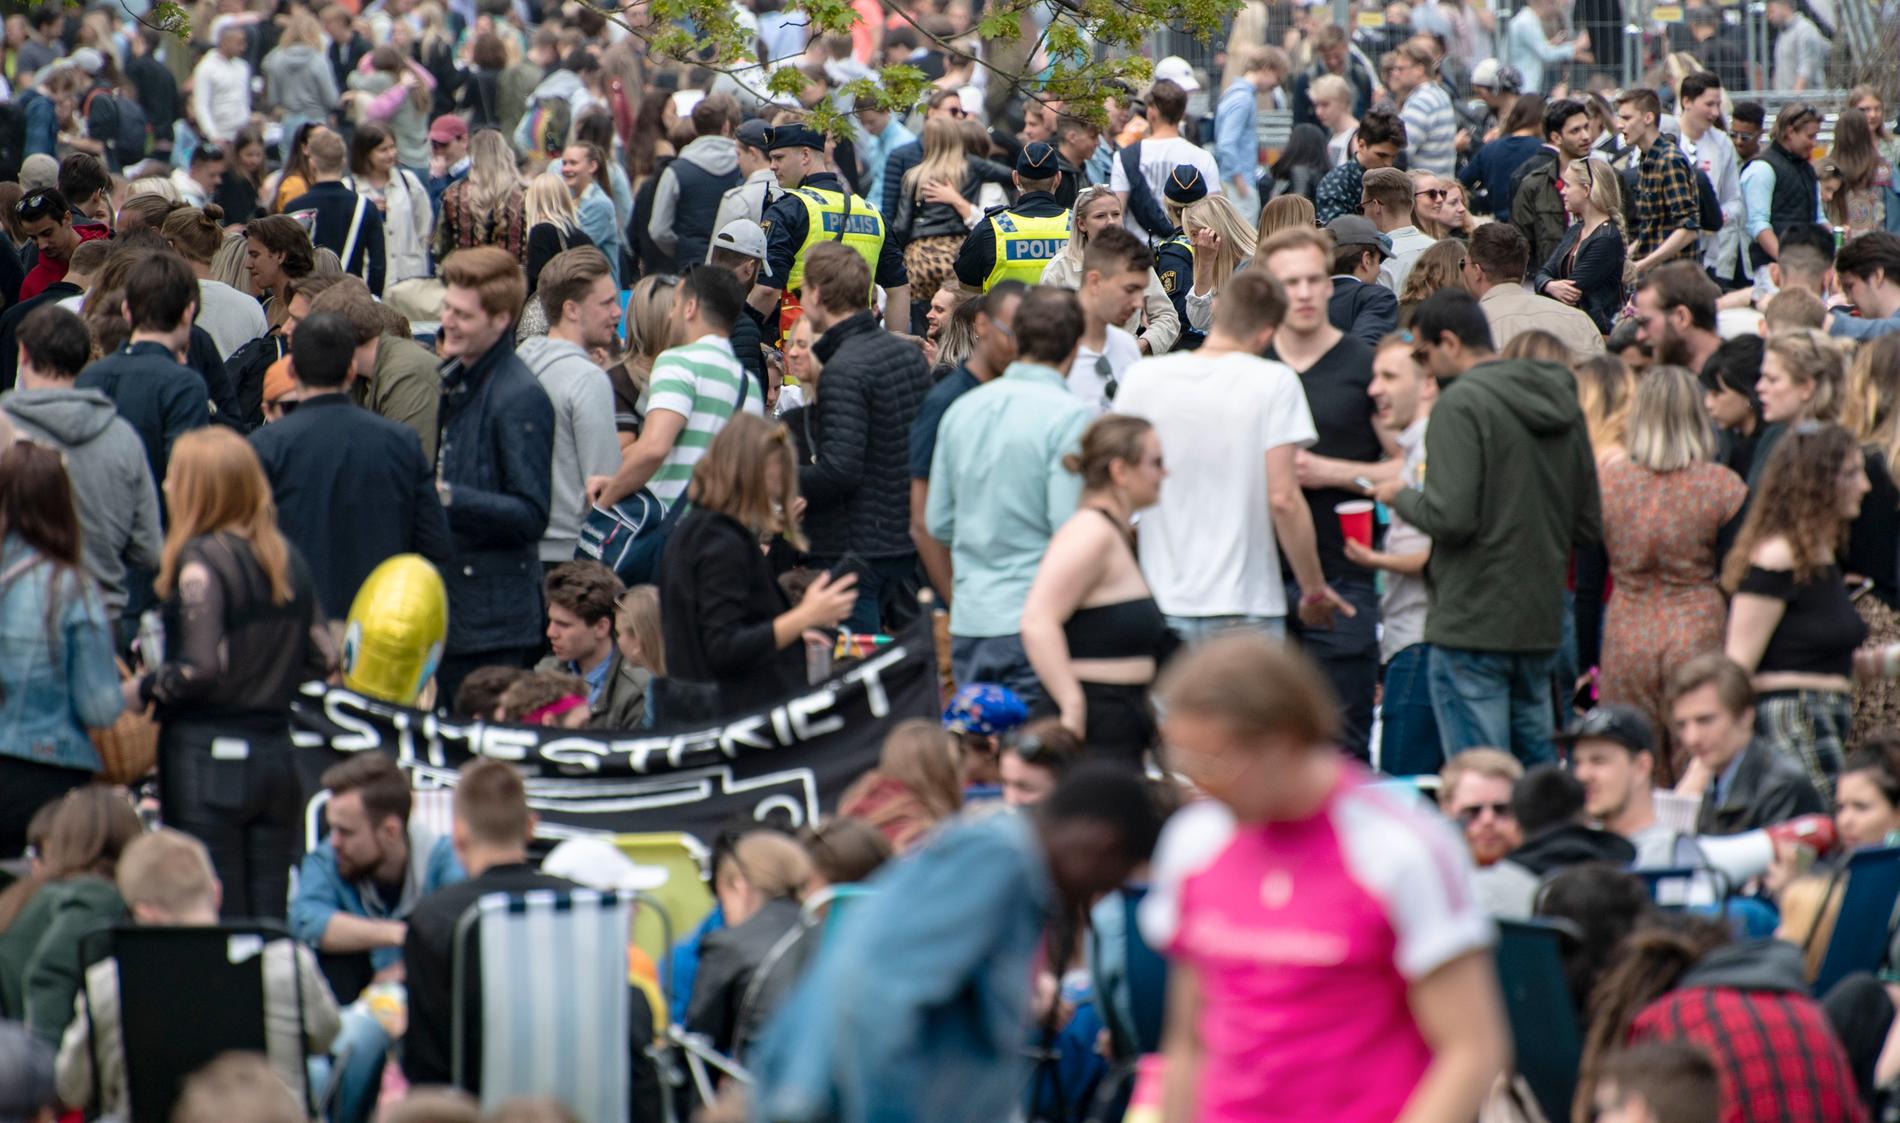 Drygt 25 000 personer firade traditionsenligt på tisdagen "siste april" i Stadsparken i Lund.